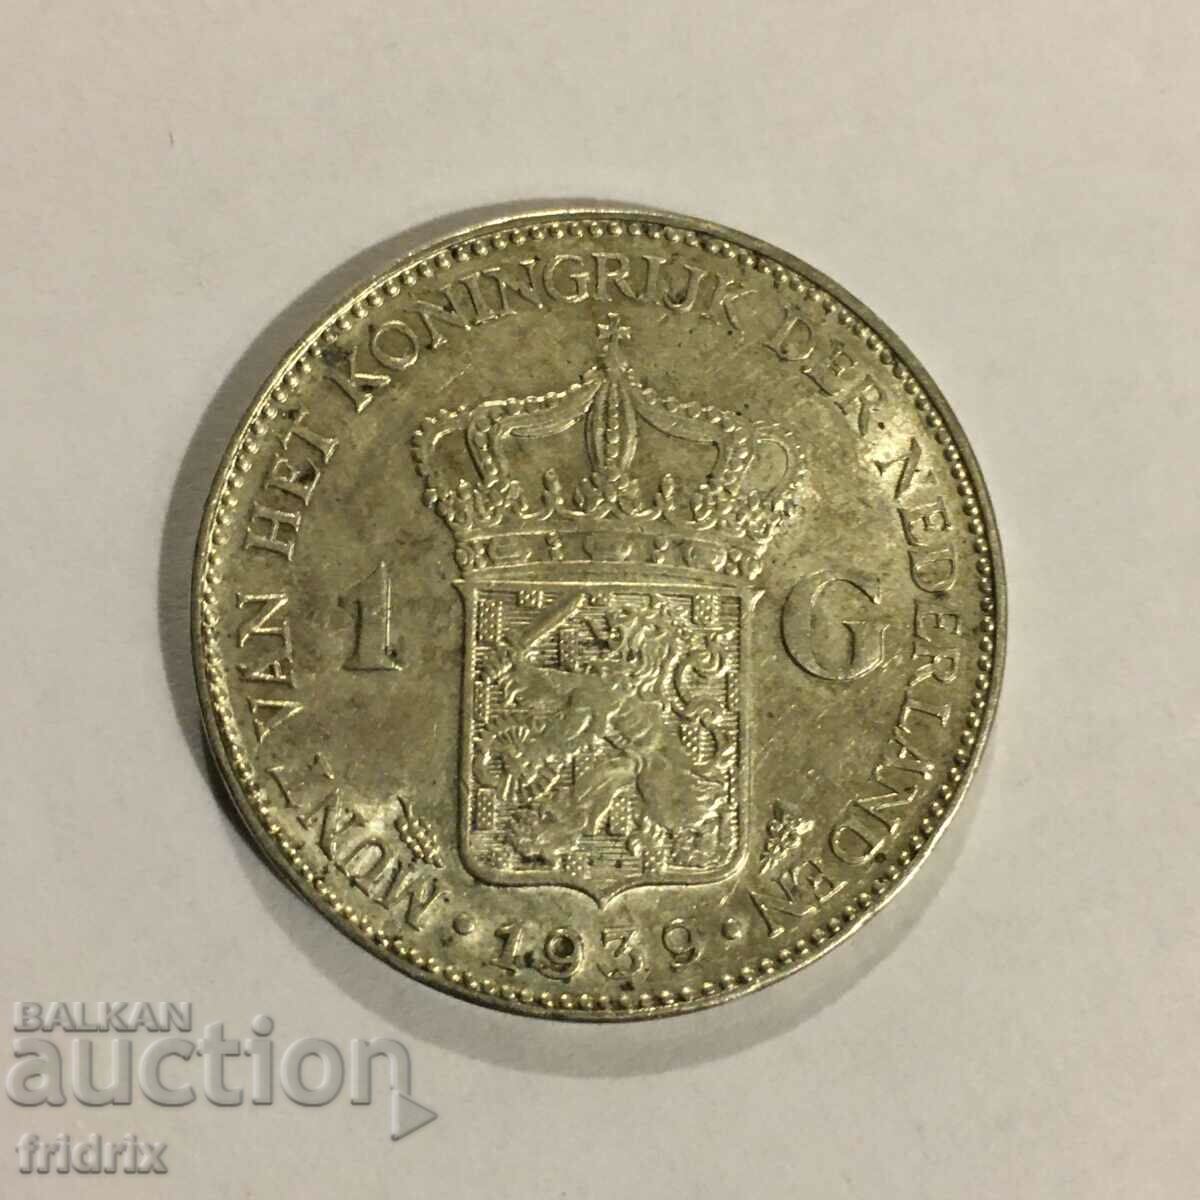 Ολλανδία 1 gulden 1939 / Ολλανδία 1 gulden 1939 UNC